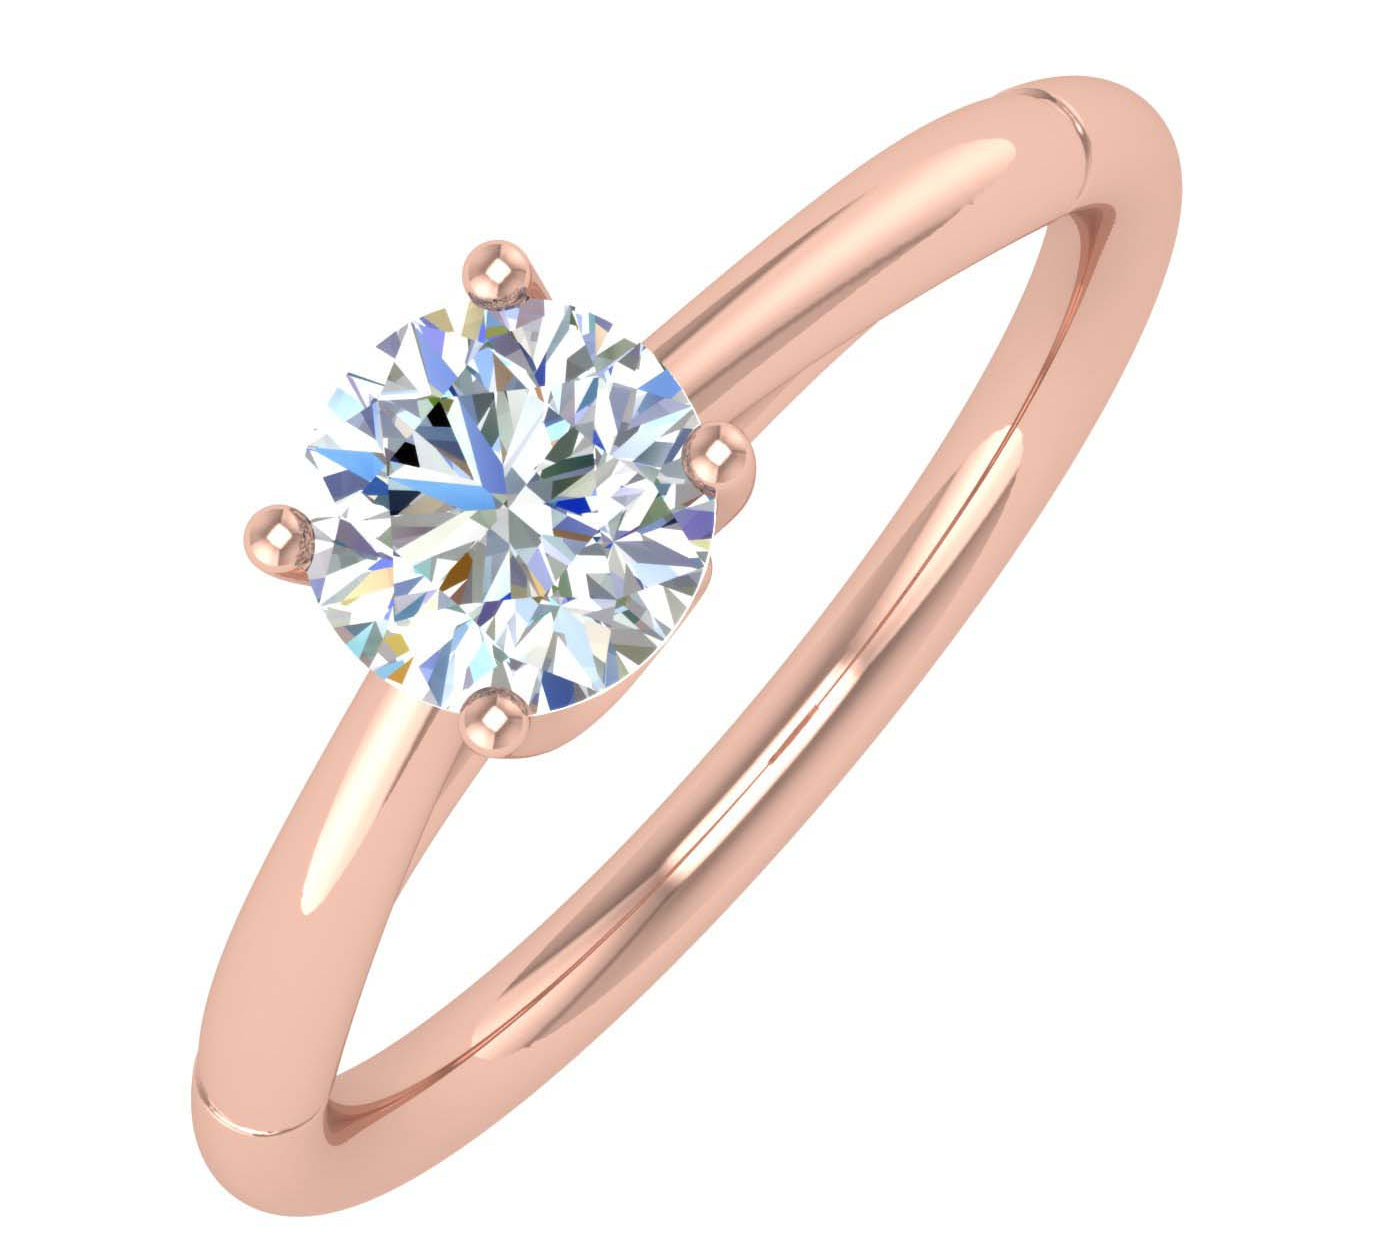 0.51 Carat Diamond Solitaire Engagement Ring in Gold - IGI Certified